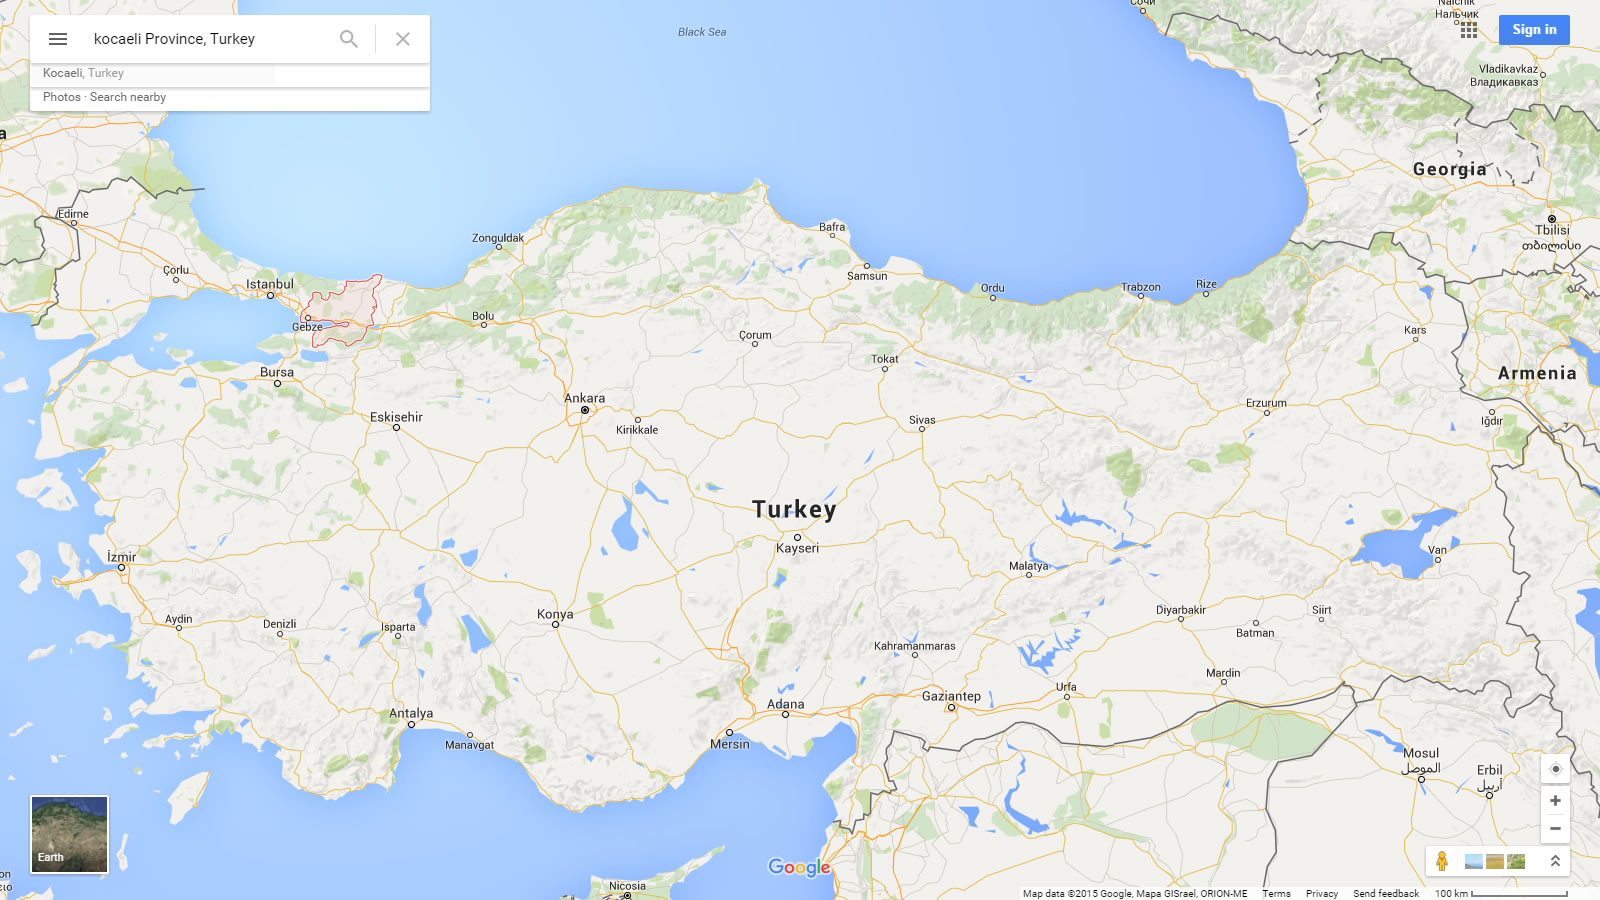 kocaeli karte turkei